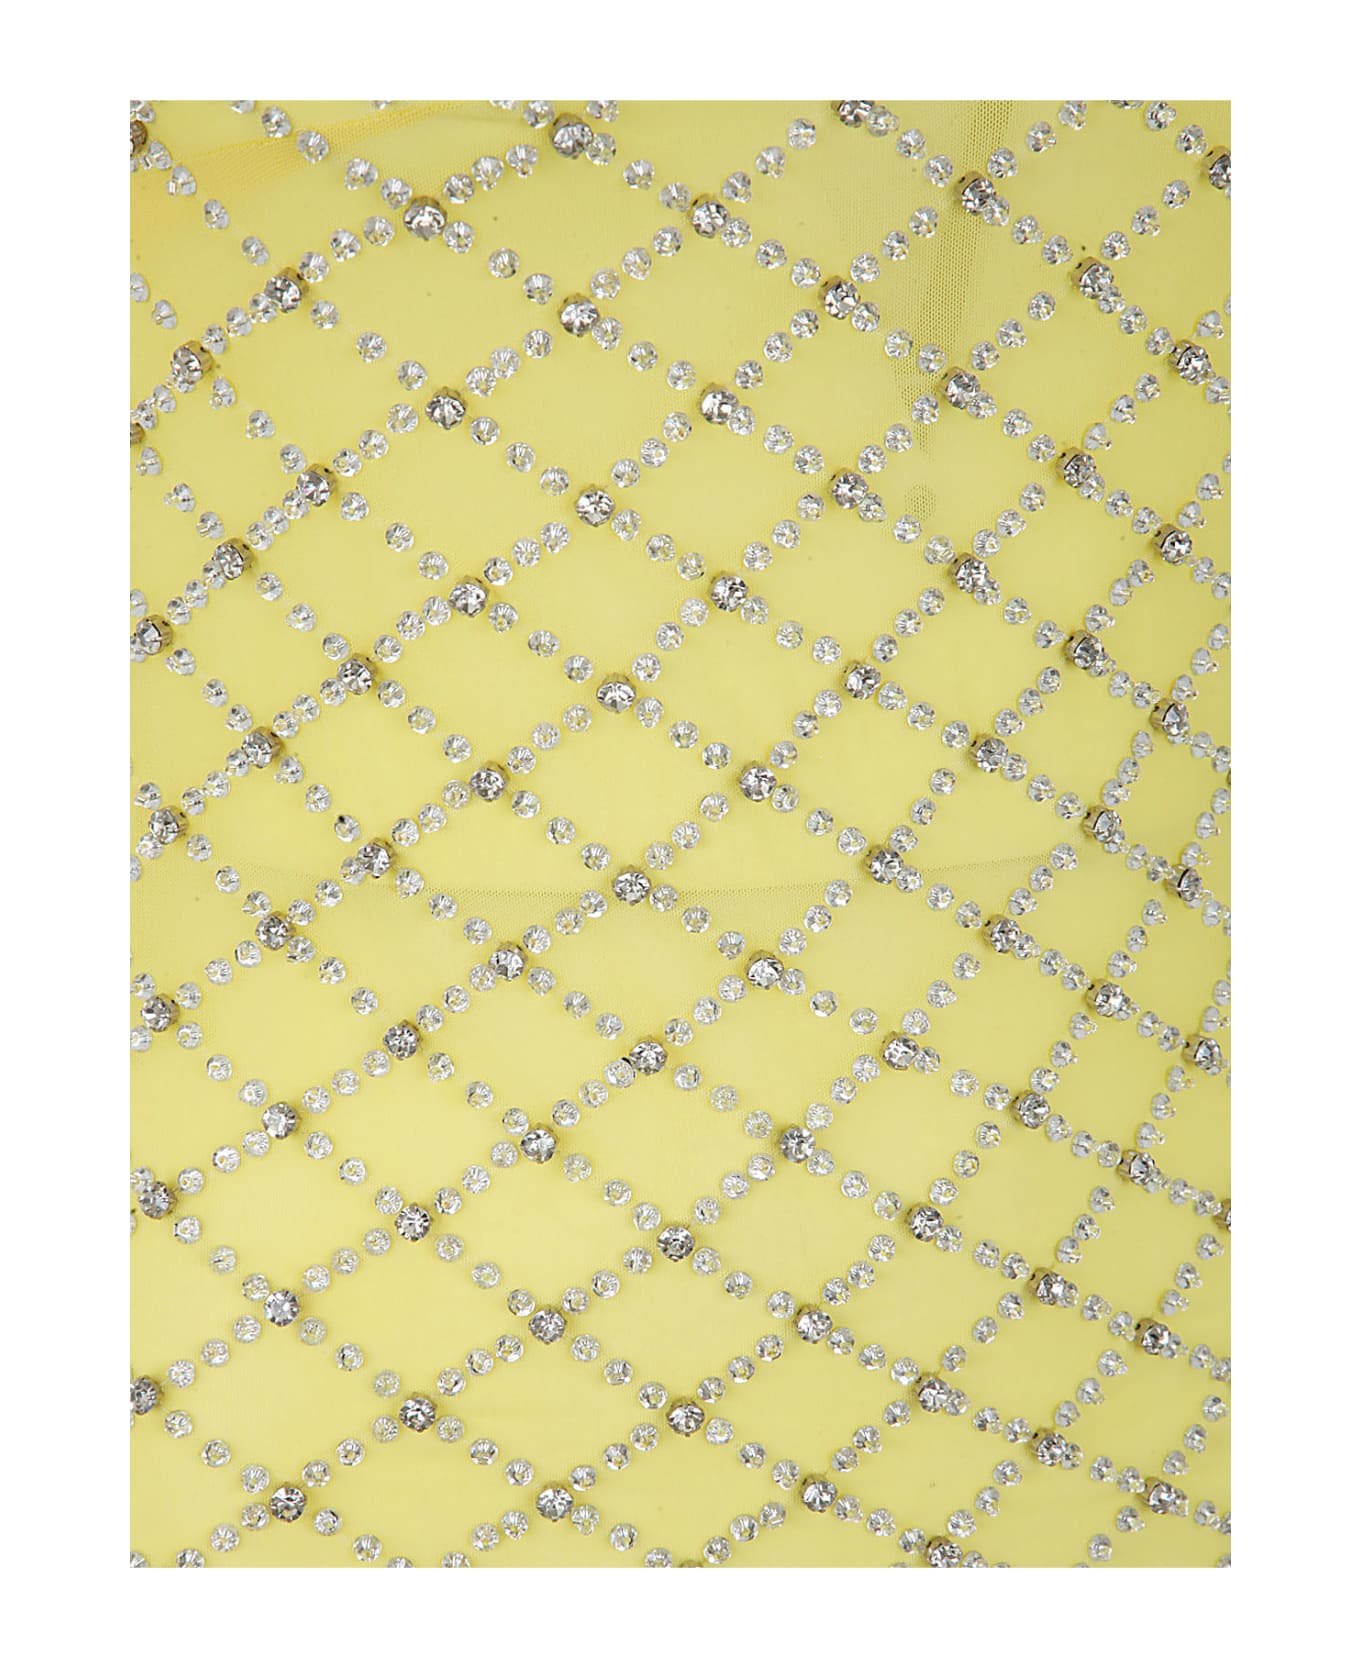 Parosh Sleeveless And Embroidered Tulleblouse - Light Yellow Pattern